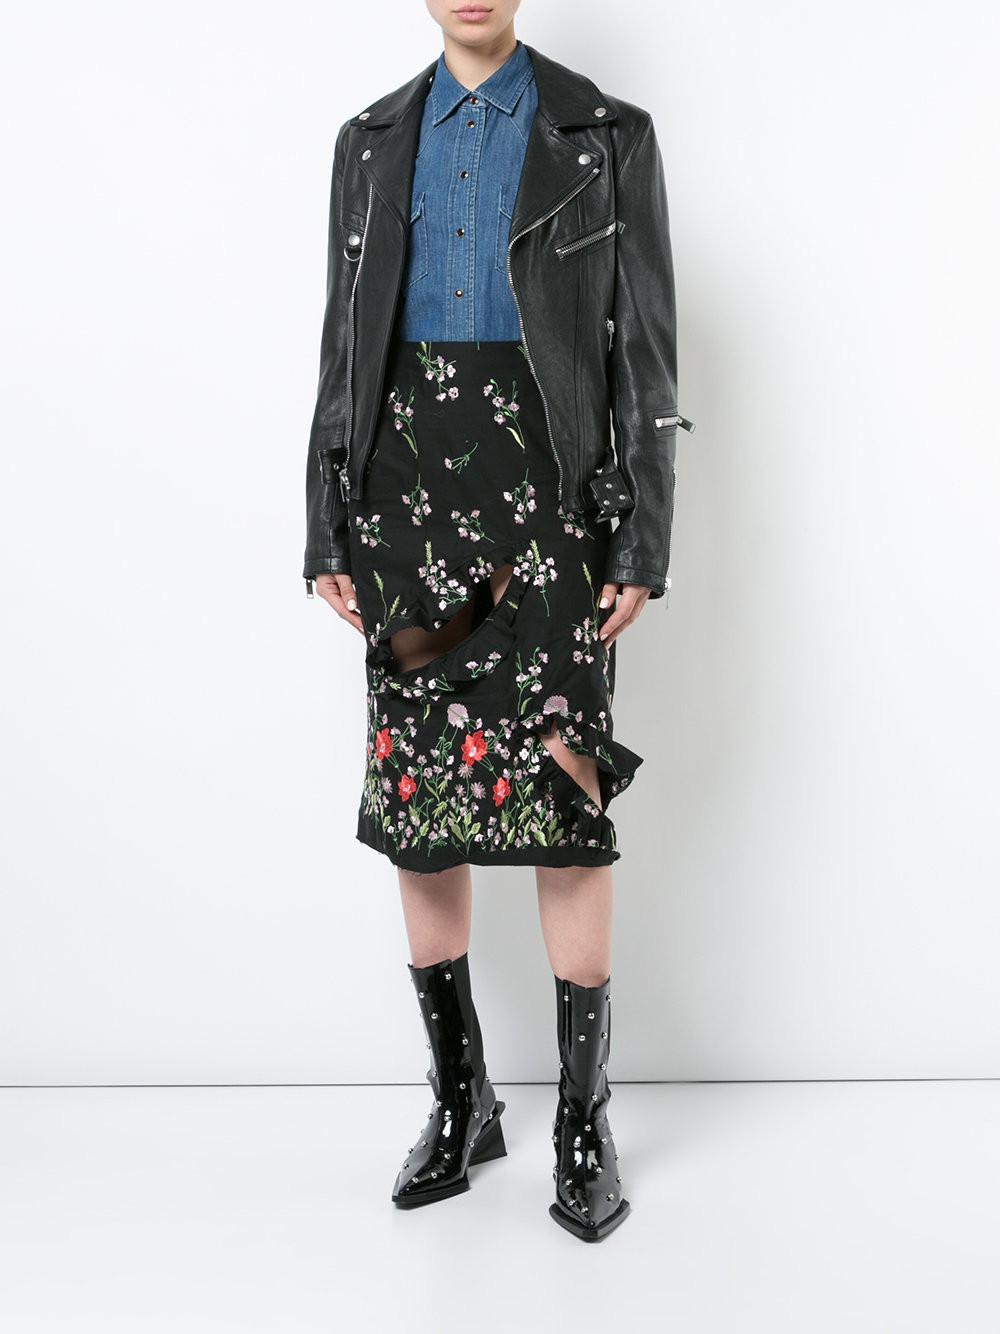 Lyst - Marques'Almeida Floral Print Skirt in Black - Save 49. ...